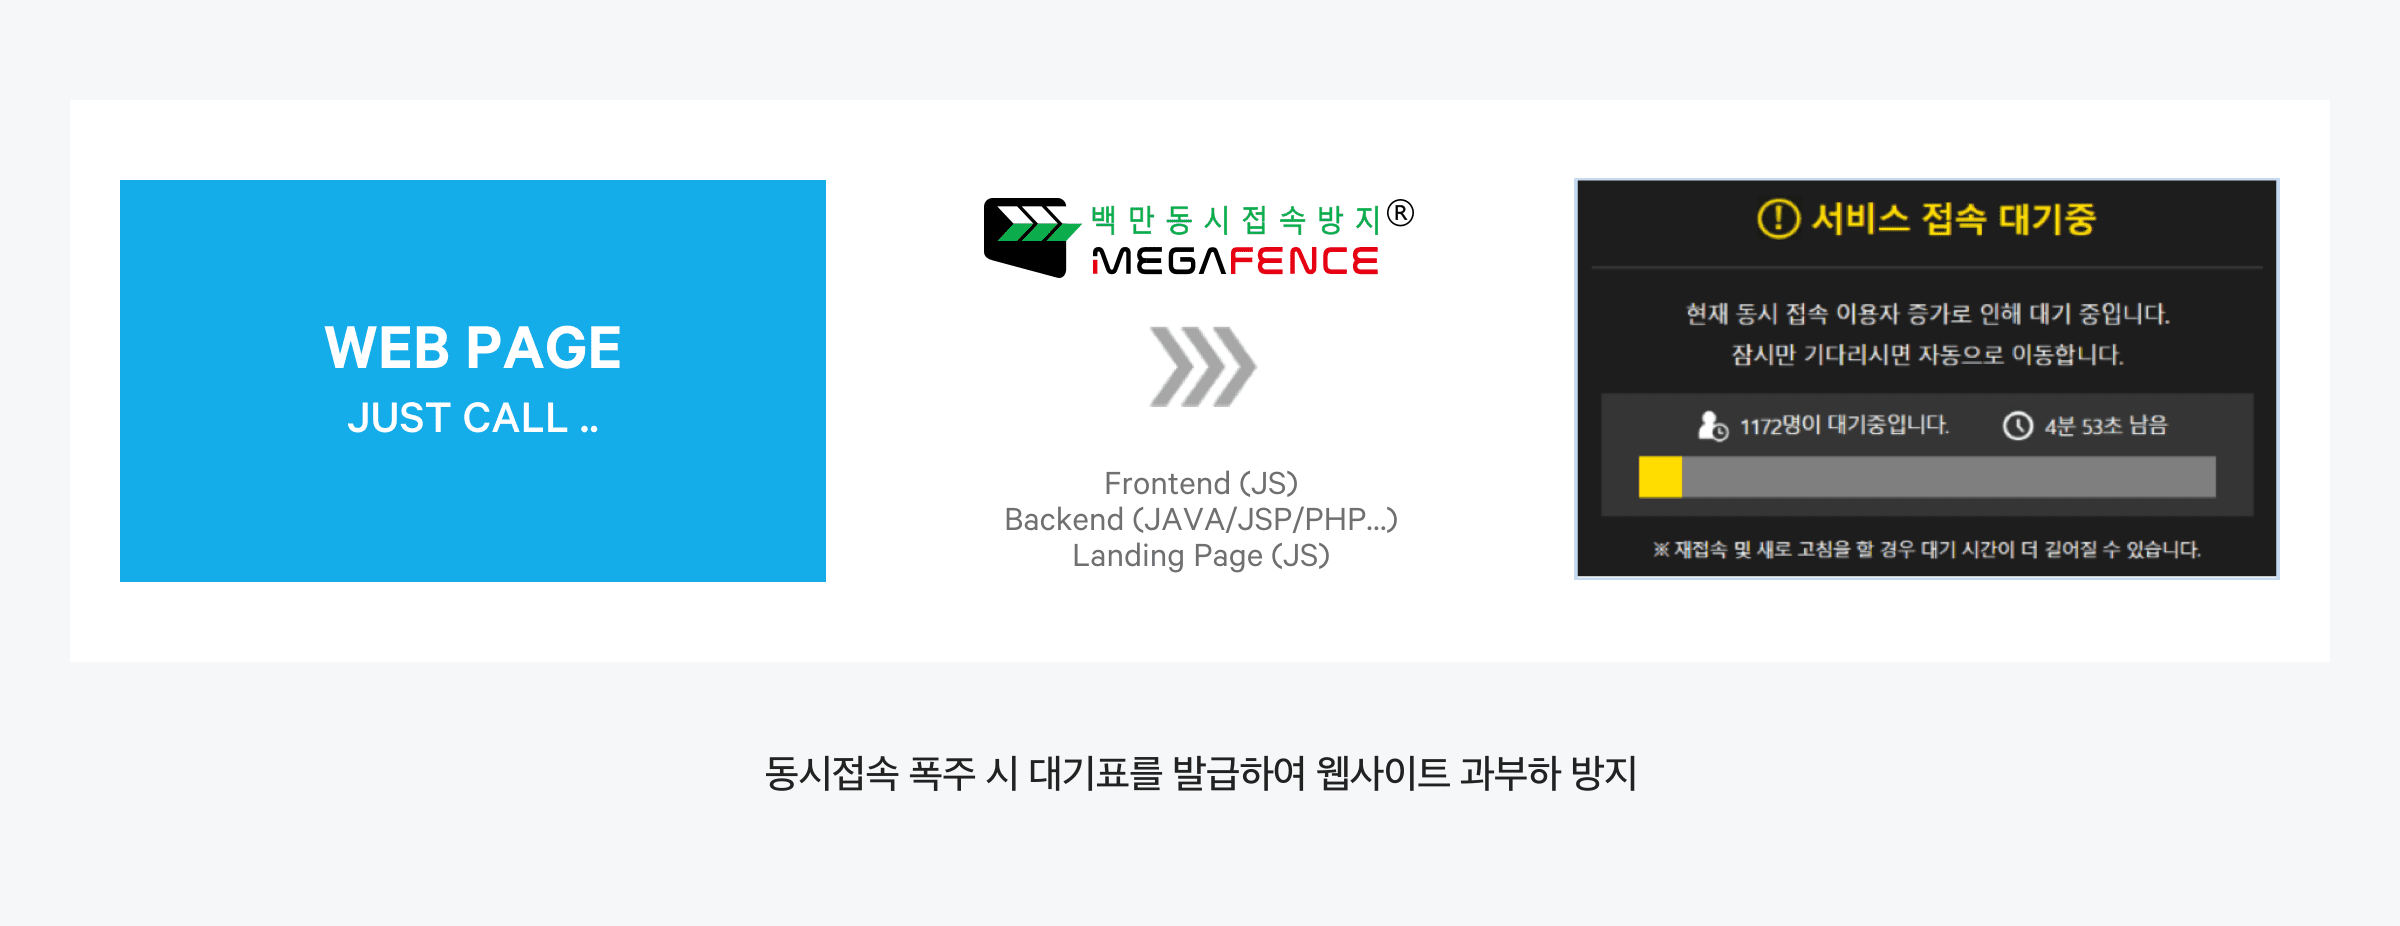 Naver Cloud Platform 네이버 클라우드 플랫폼